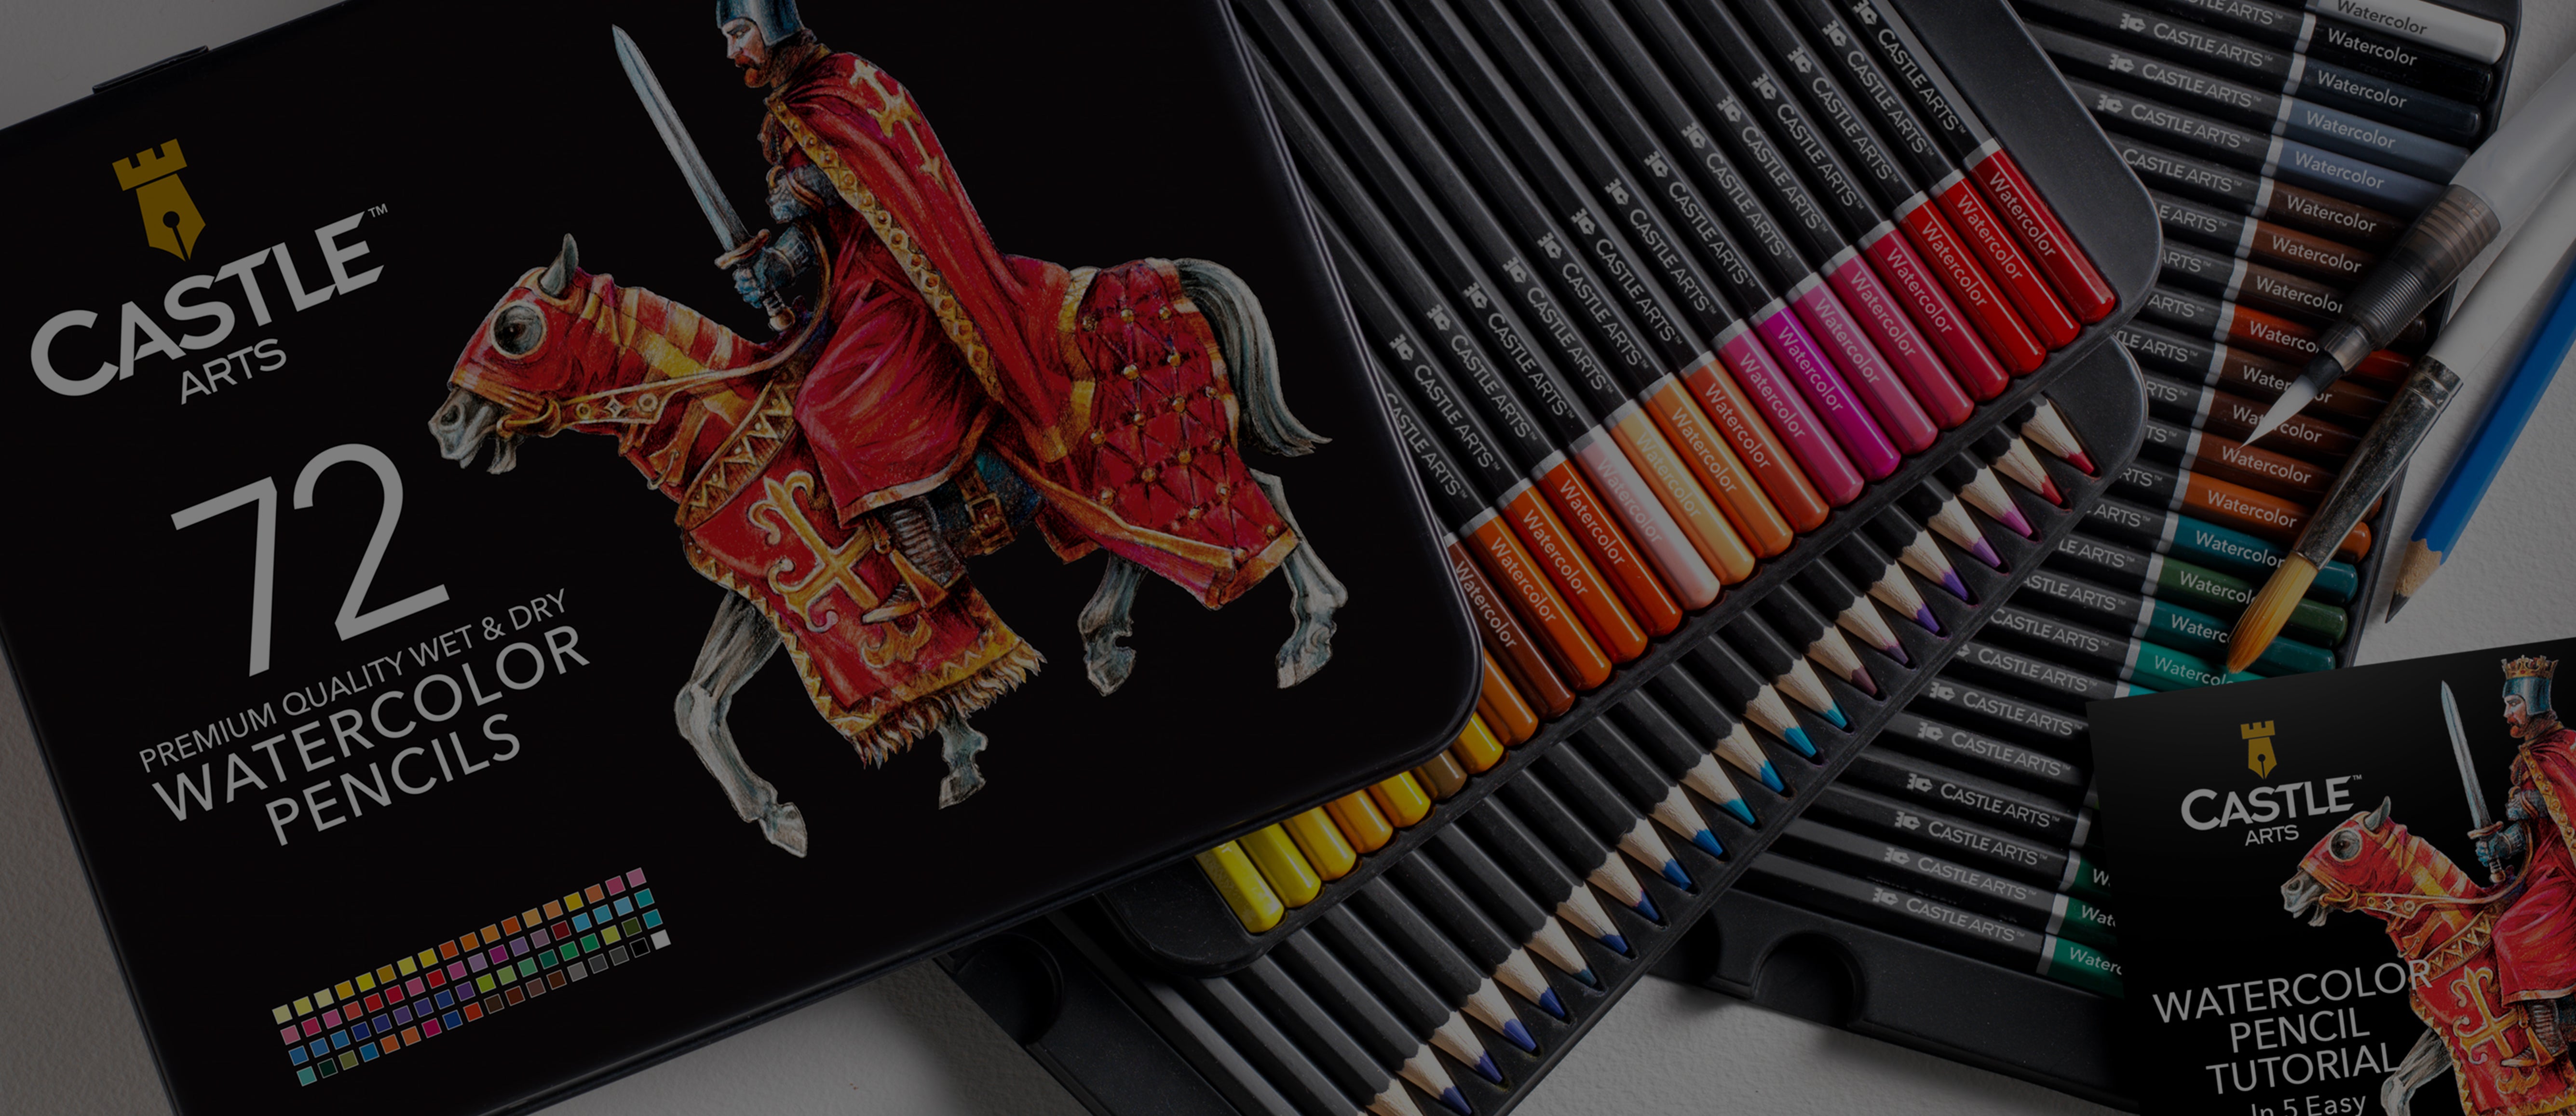 Castle Art Supplies 72 Watercolor Pencils Set for s and